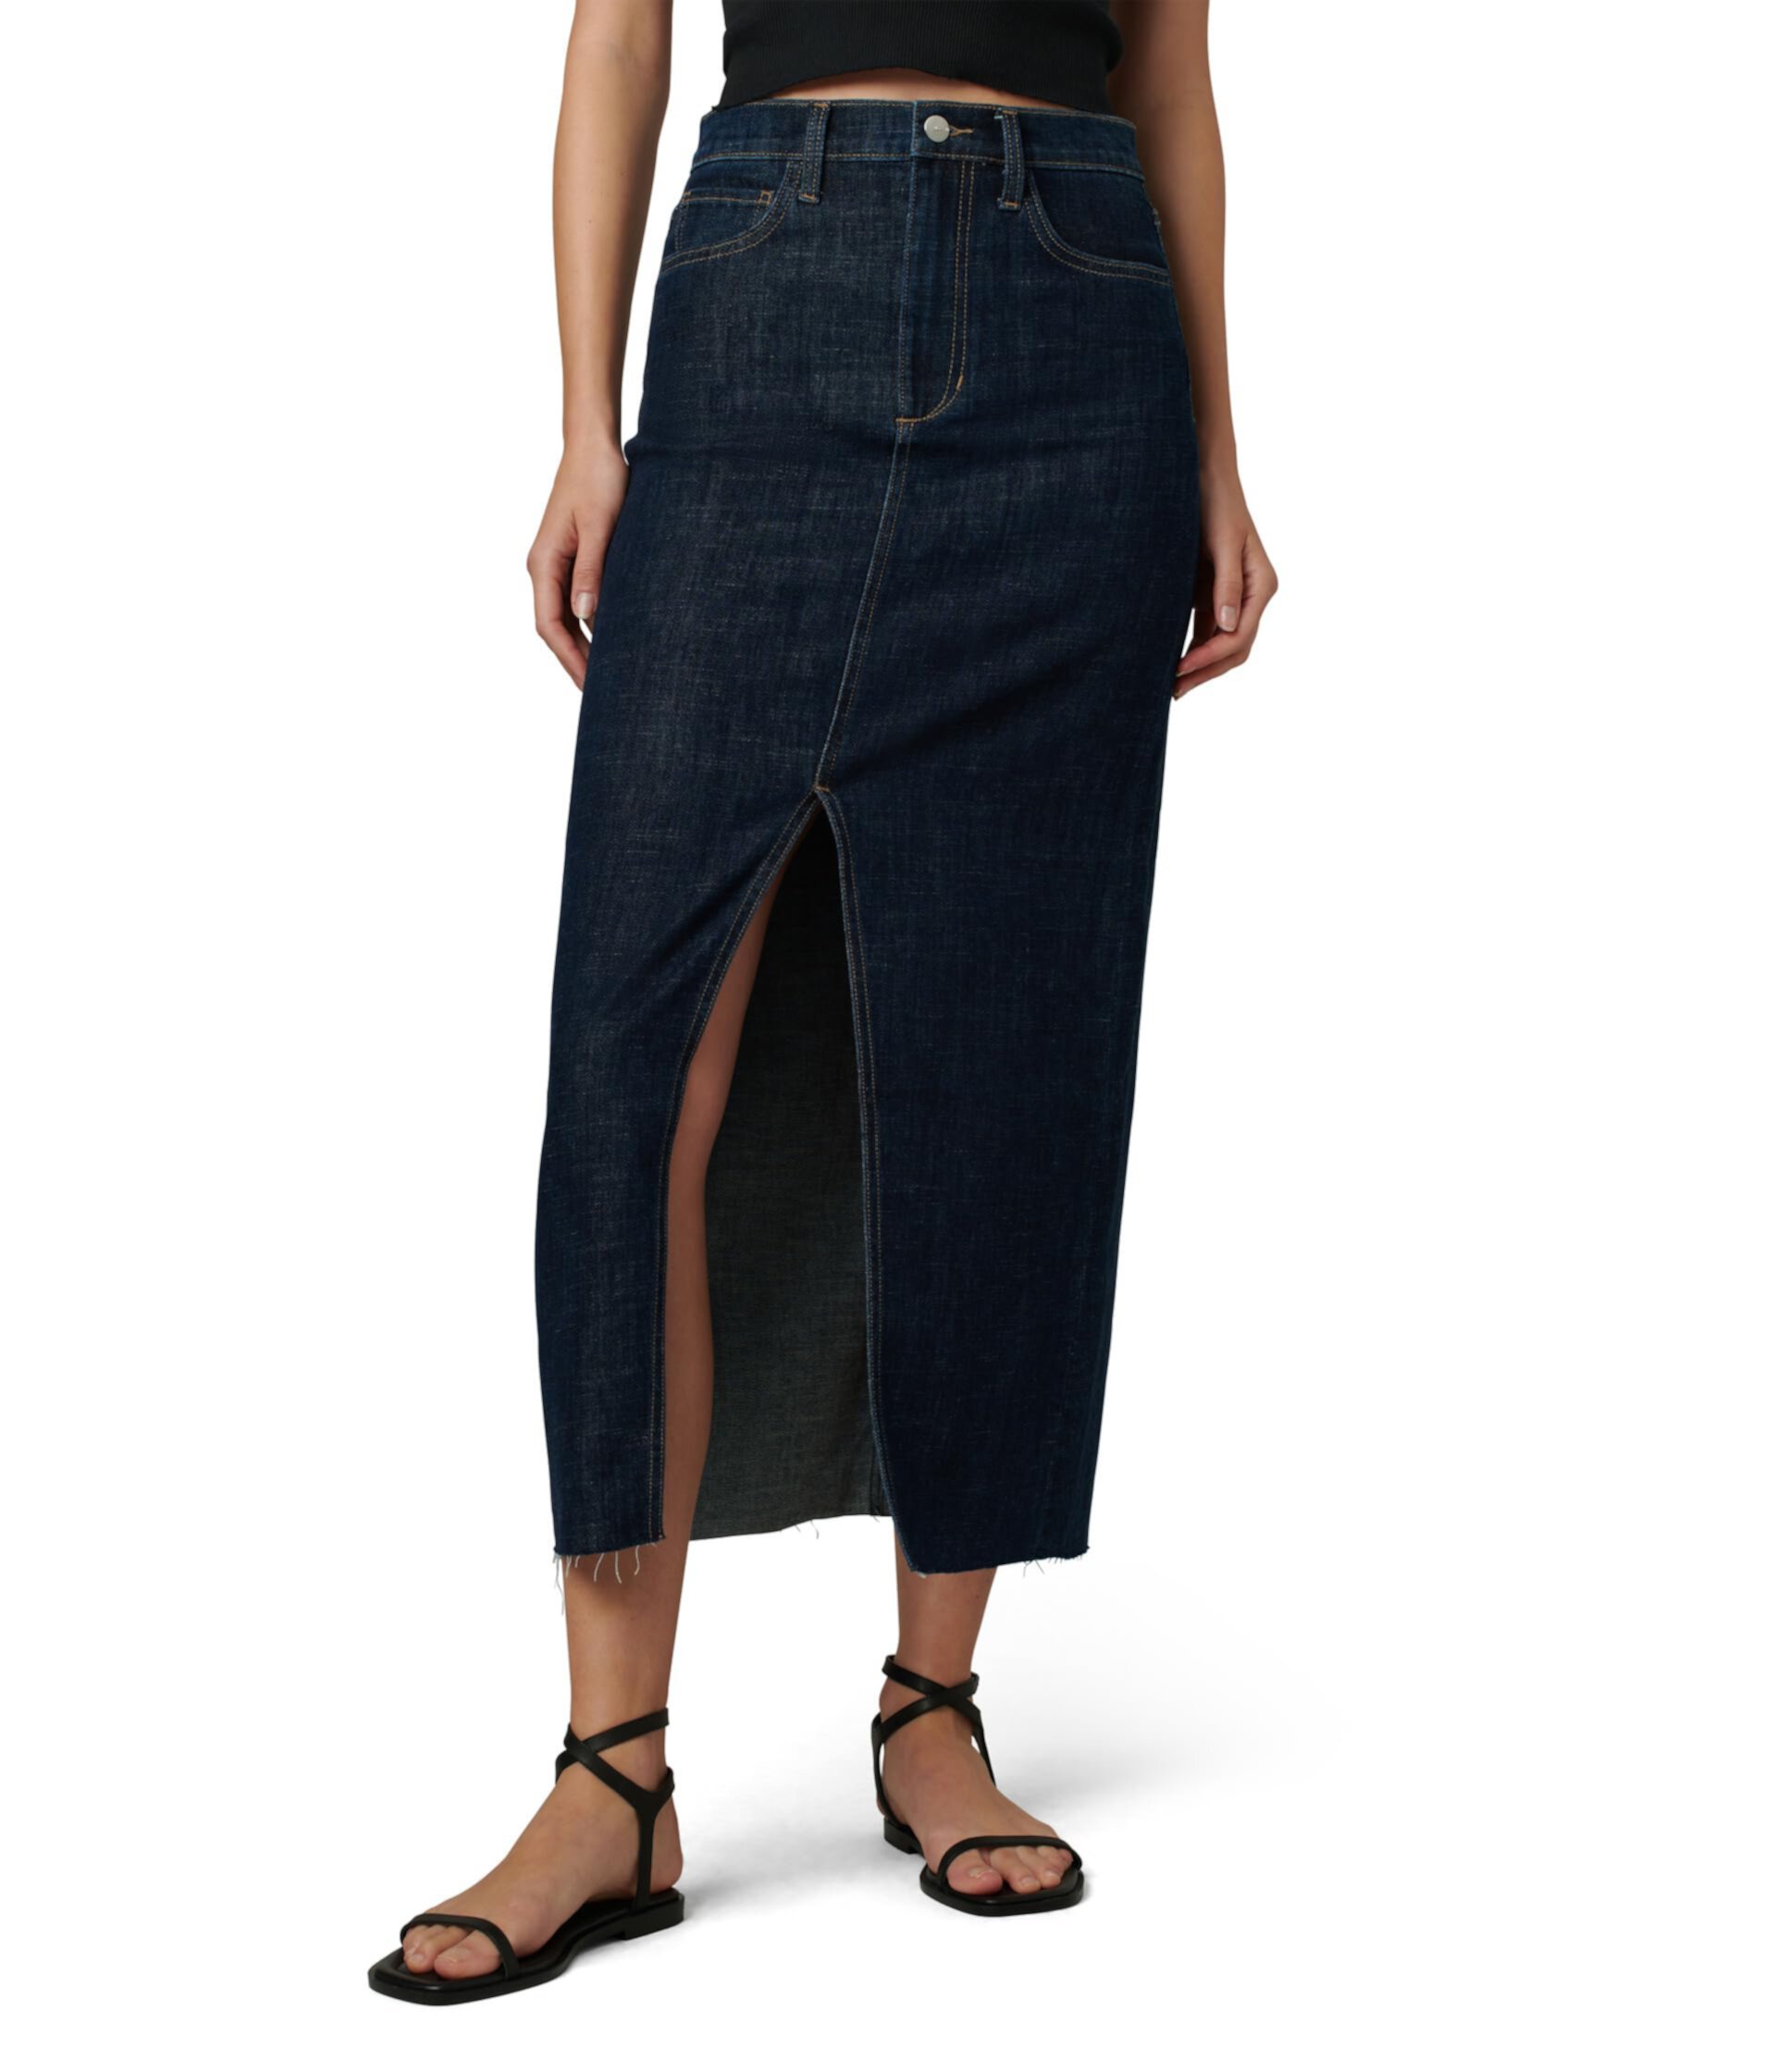 The Eva Maxi Skirt Joe's Jeans